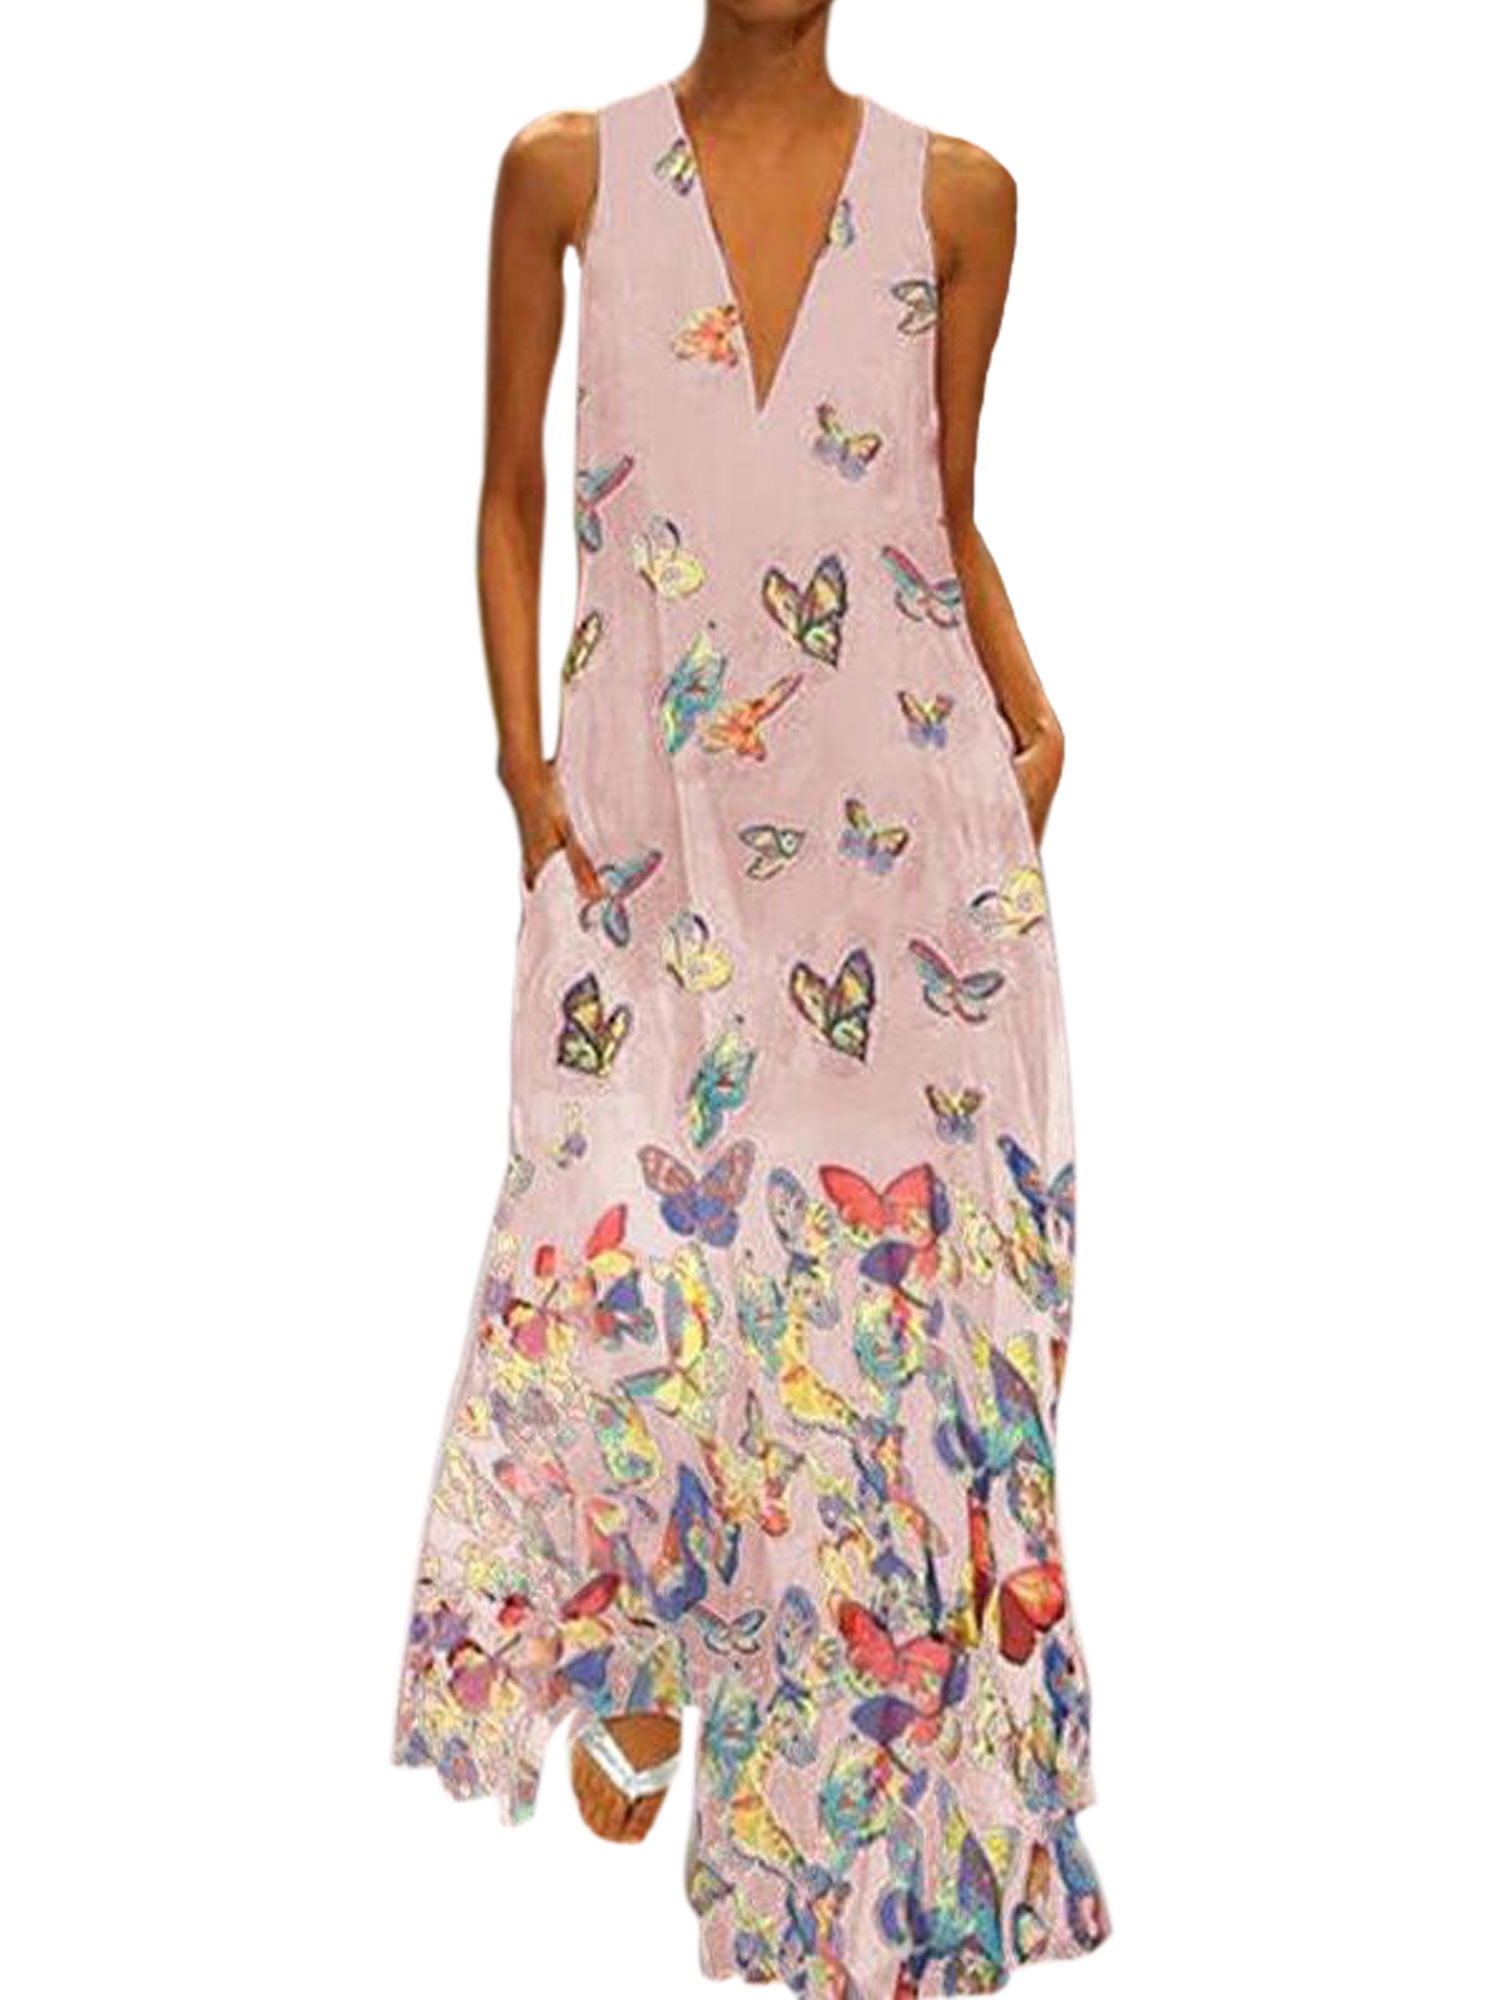 Women Dresses Plus Size Clearance Hosamtel V Neck Sleeveless Butterfly Print Pocket Elegant Casual Summer Long Maxi Dress 